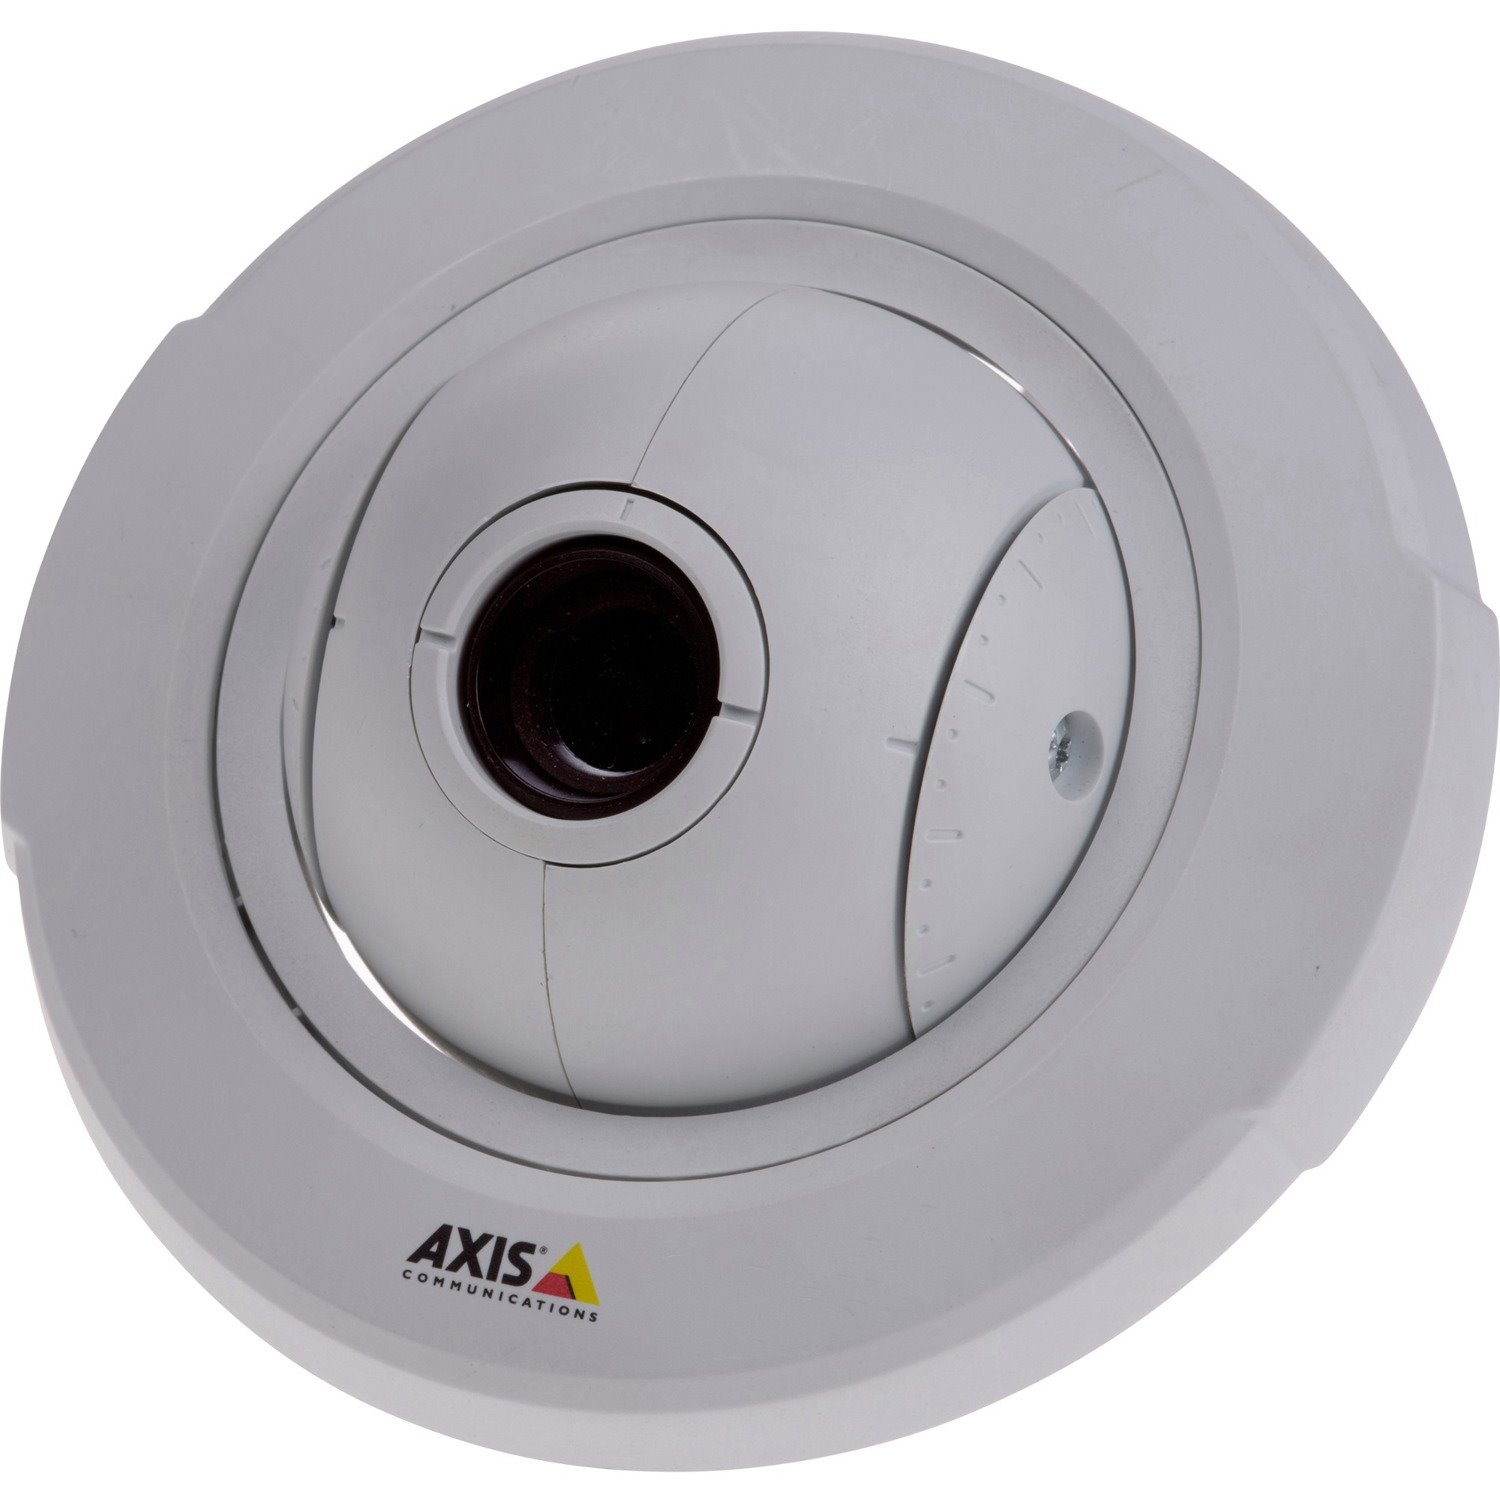 AXIS P1290 300 Kilopixel Indoor/Outdoor Network Camera - Colour - Dome - White - TAA Compliant